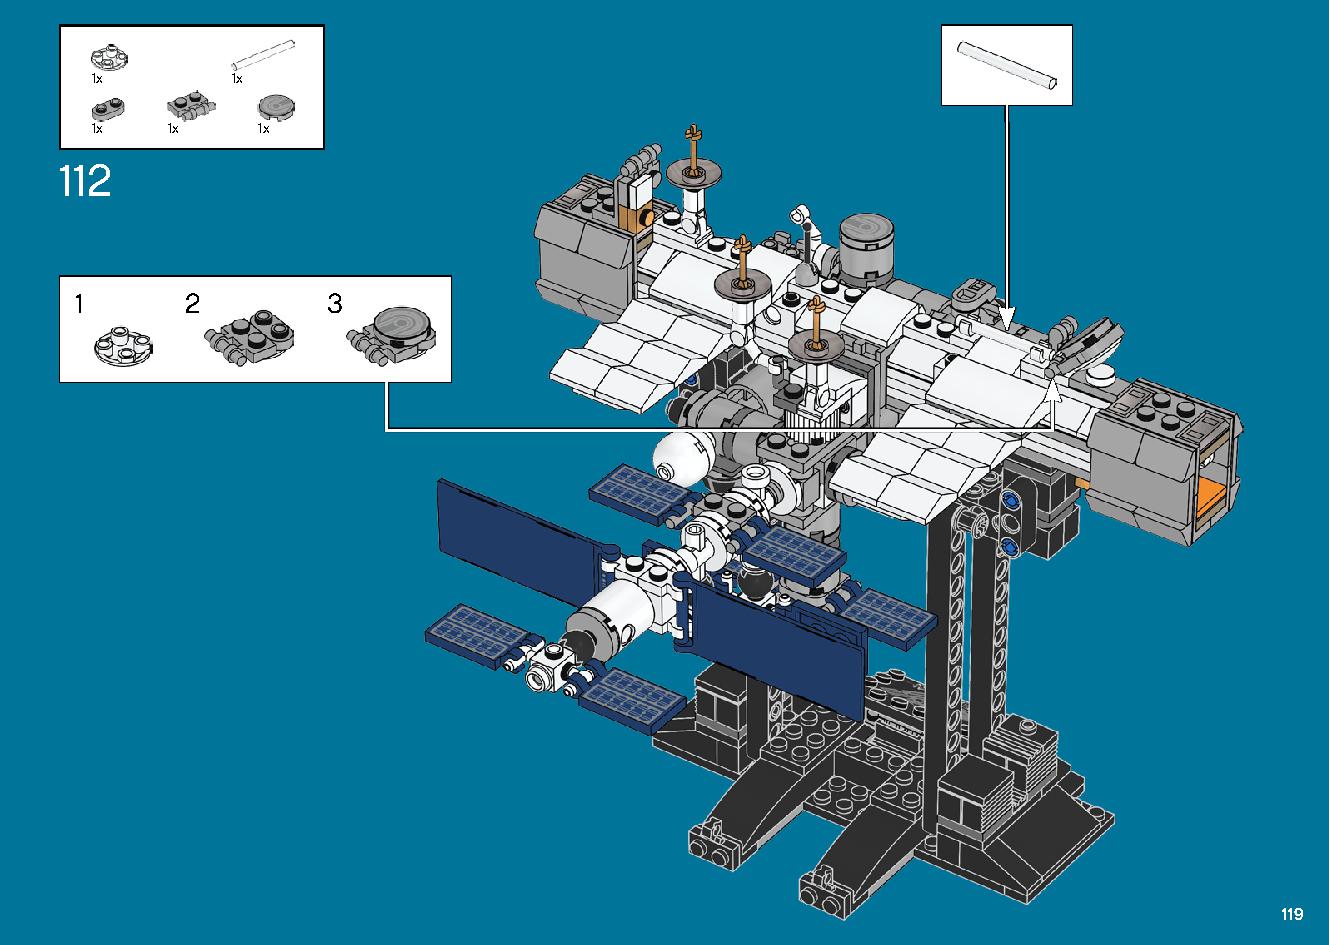 International Space Station 21321 レゴの商品情報 レゴの説明書・組立方法 119 page